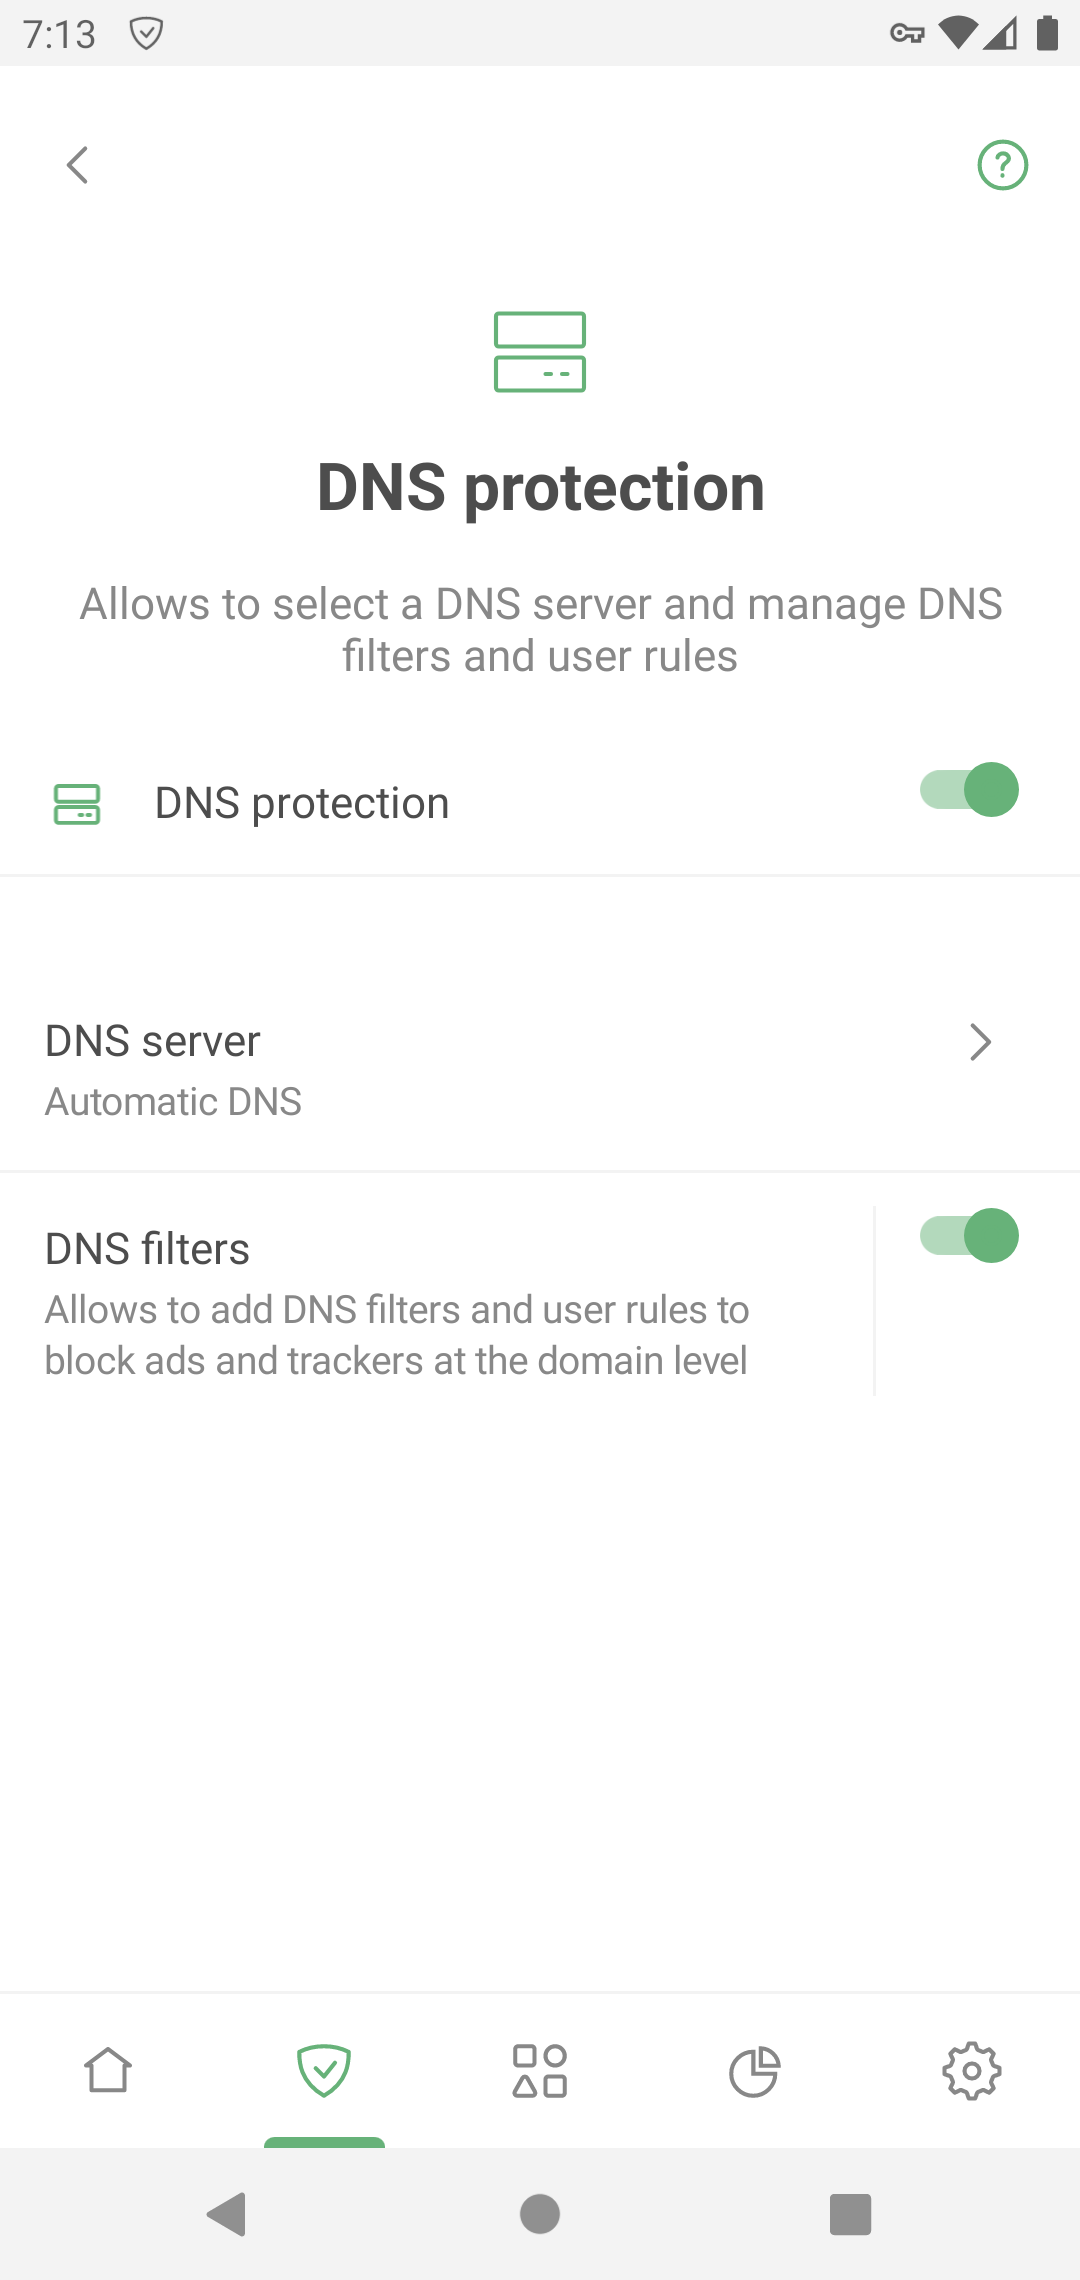 DNS-защита *mobile_border